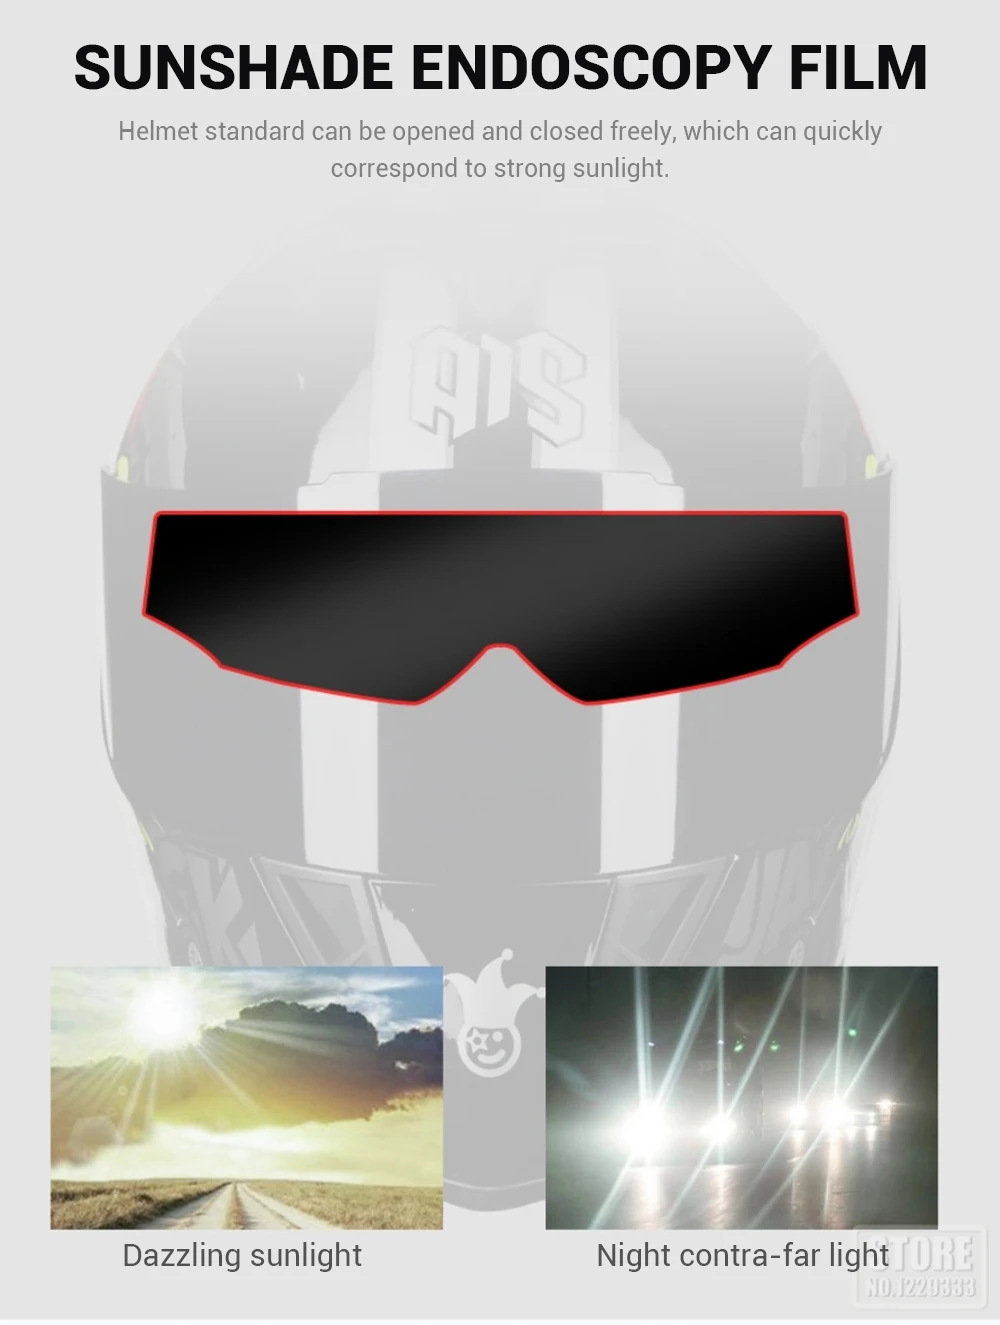 AIS мотоциклетный шлем с двойным щитком, мотоциклетный шлем для мотокросса, шлем для скутера, шлемы для верховой езды